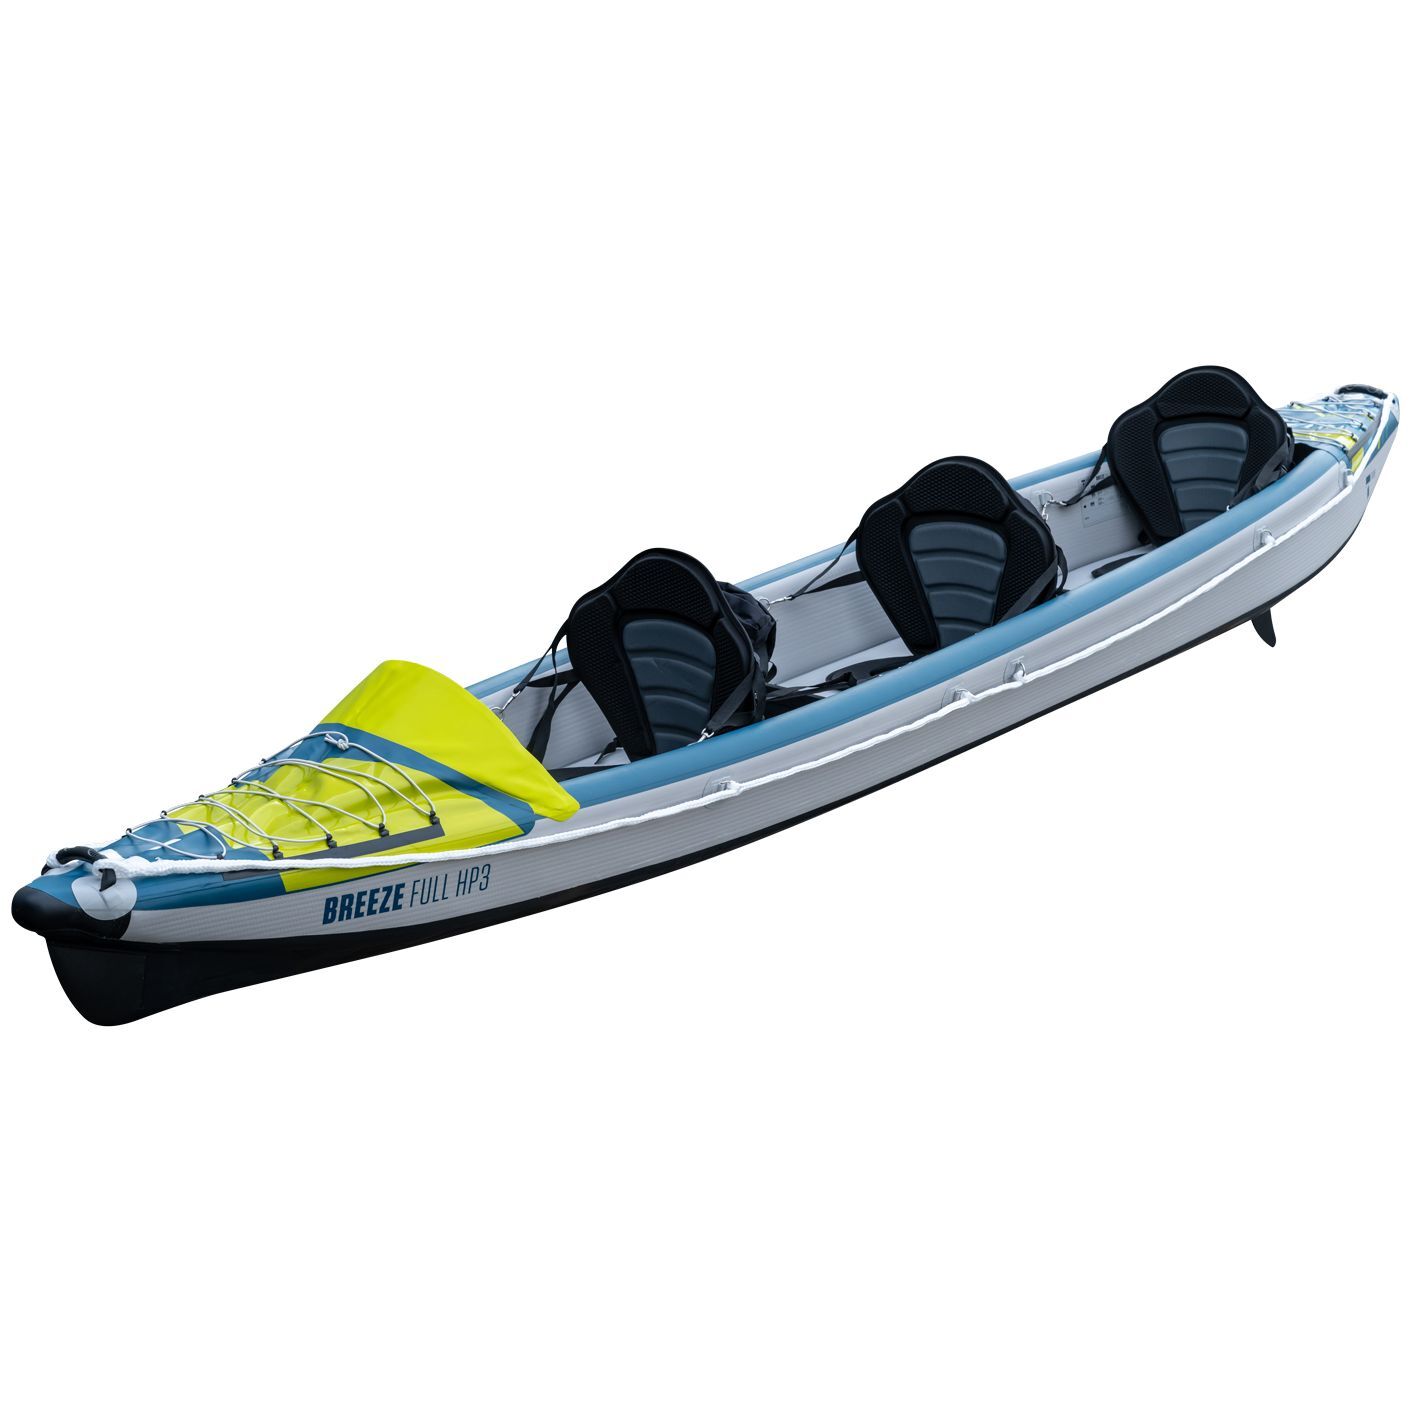 Tahe Outdoor Kayak Air Breeze Full Hp3 - aufblasbares Kajak